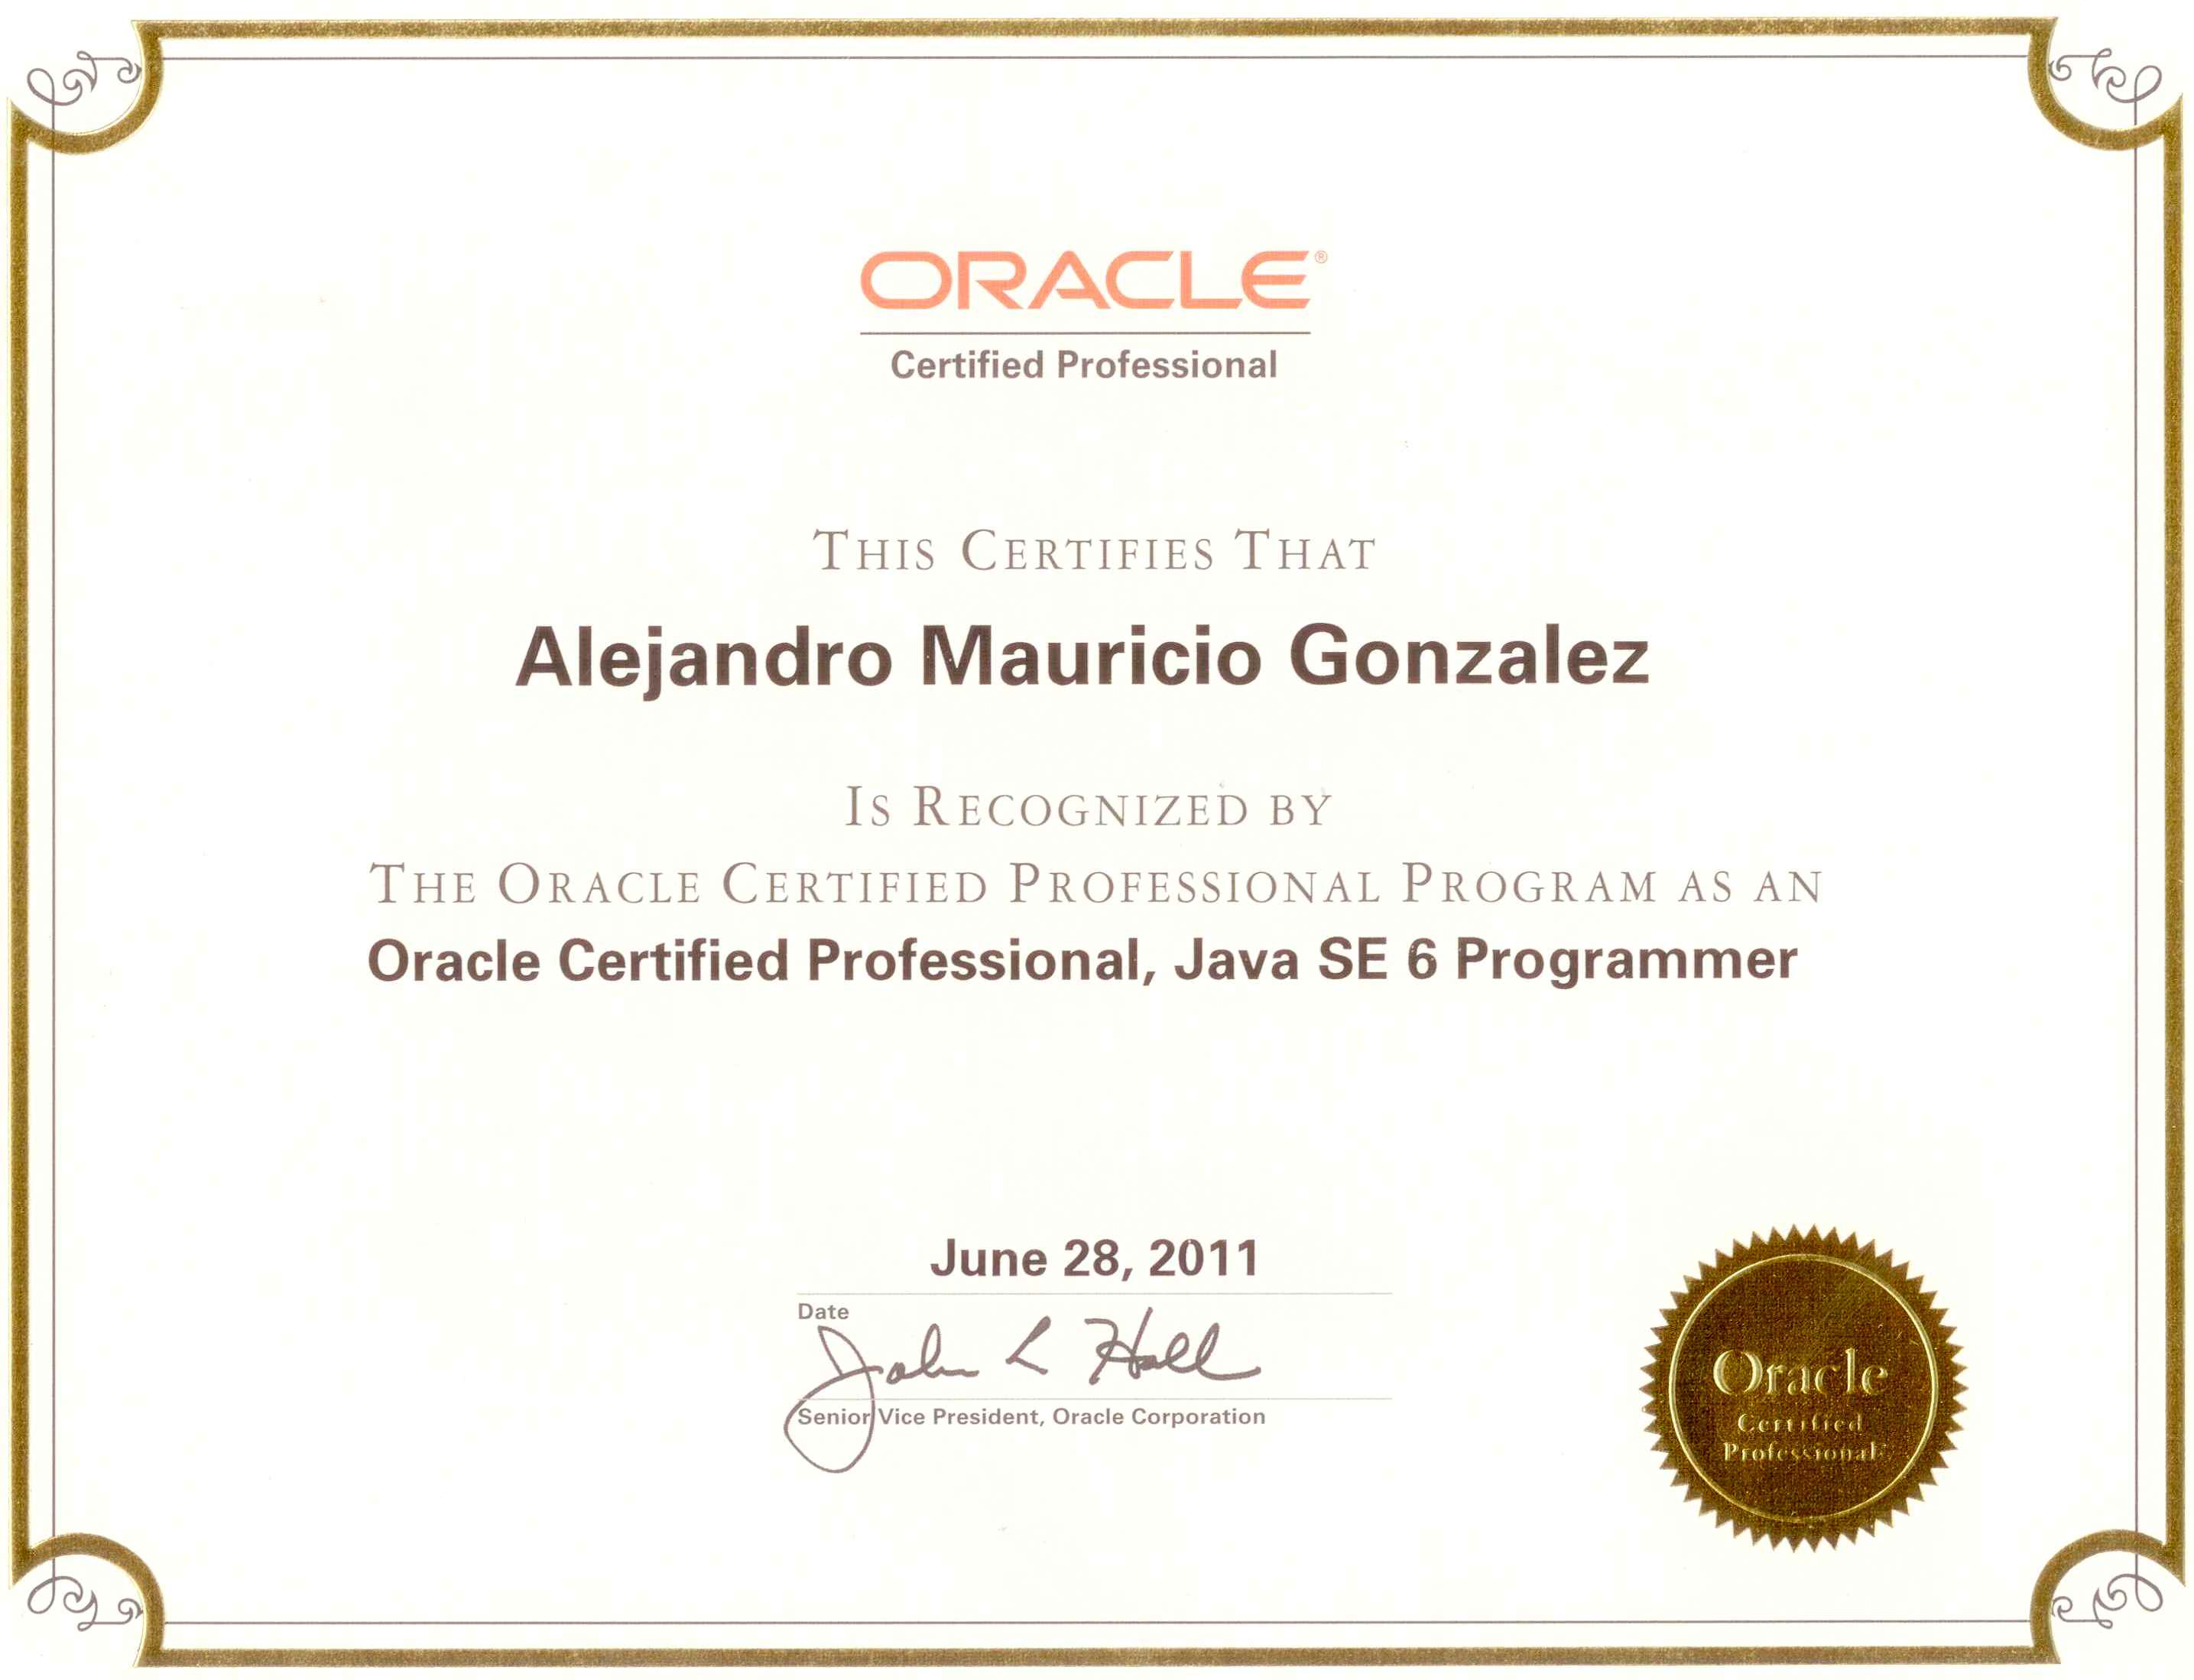 Java certification